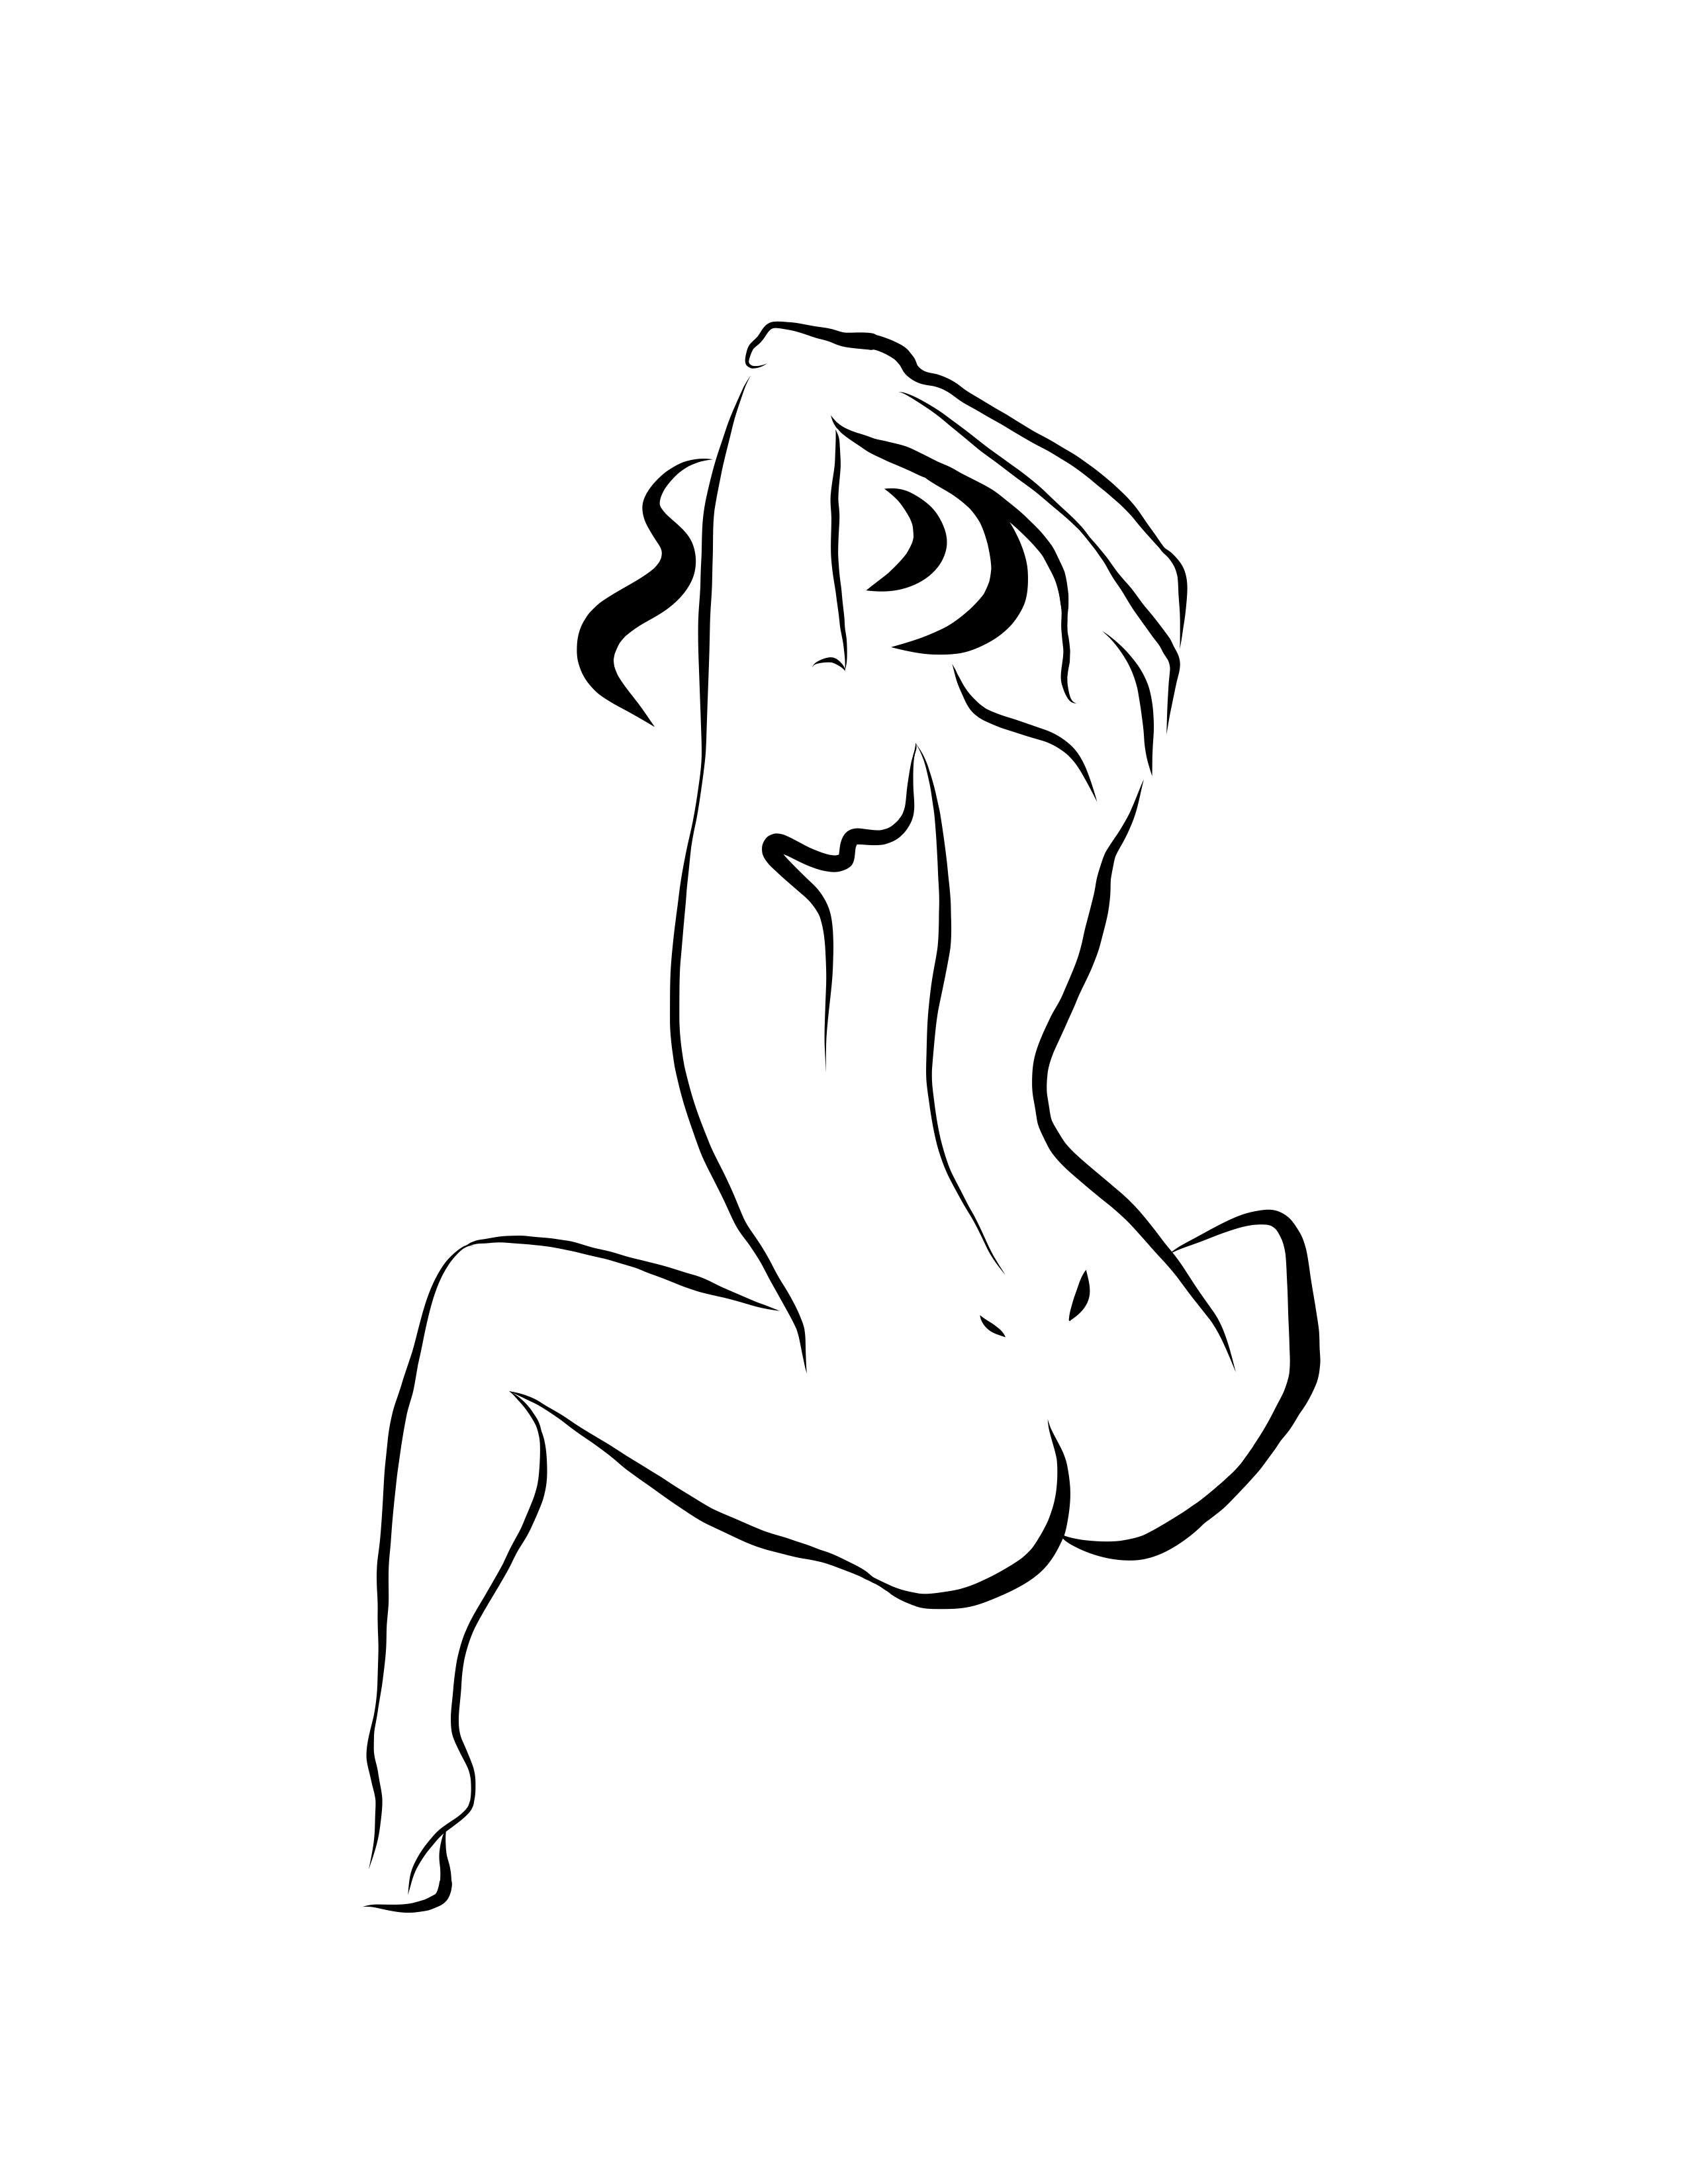 Haiku #13  - Digital Vector Drawing Seated Female Nude Woman Figure from Behind